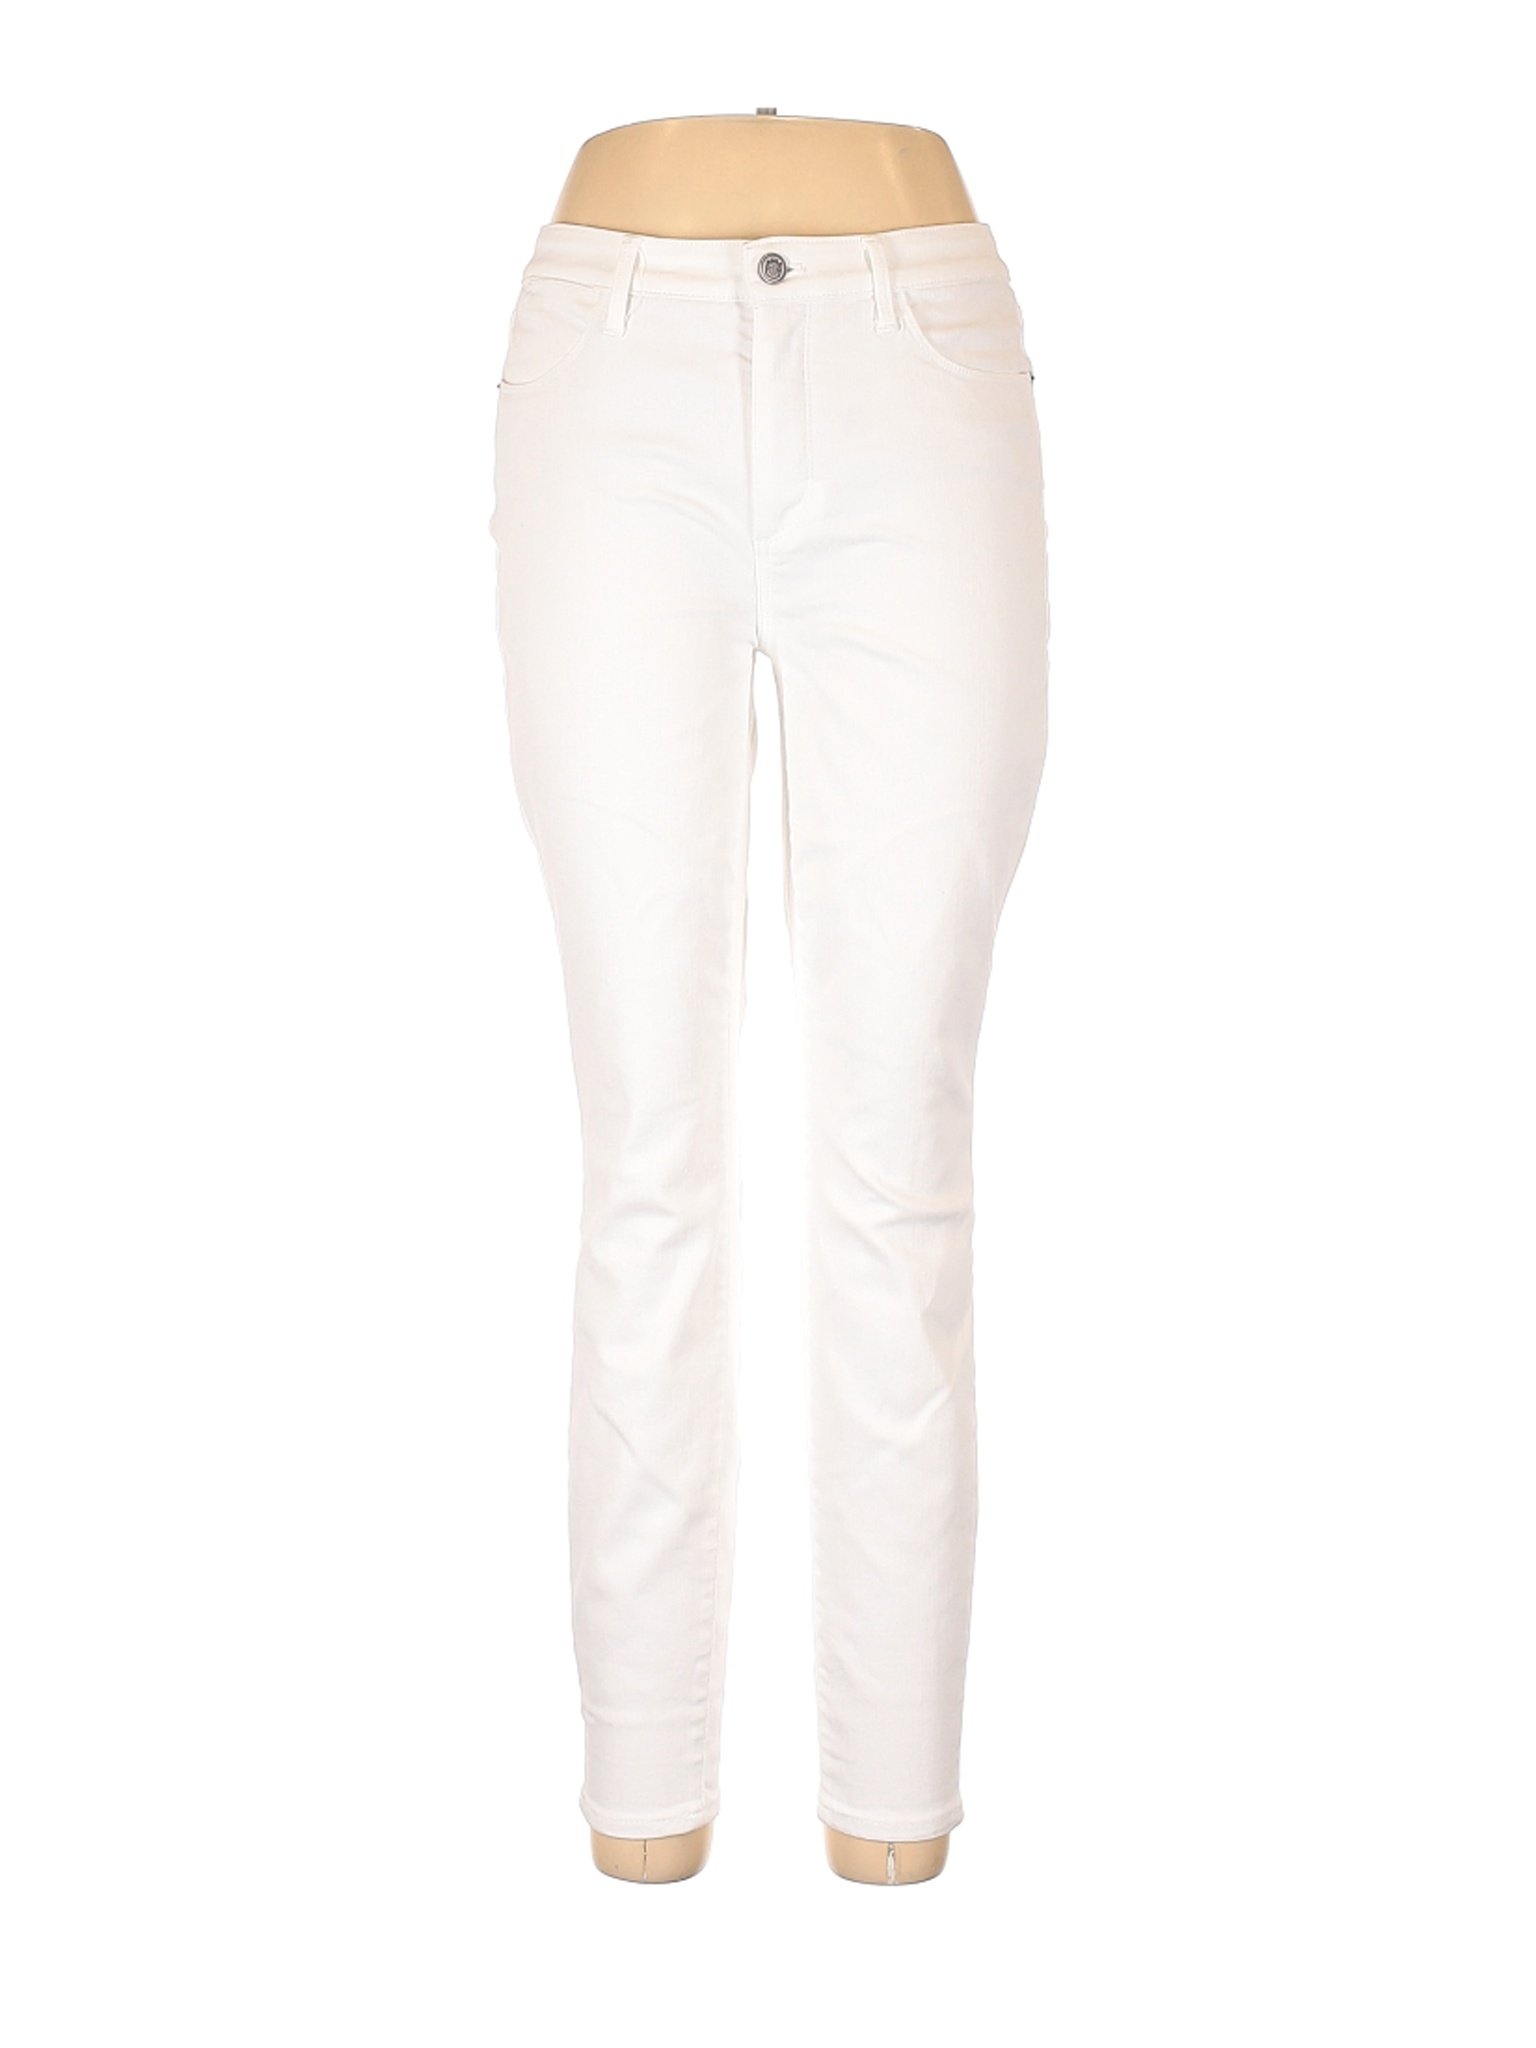 Talbots Women White Jeans 6 | eBay